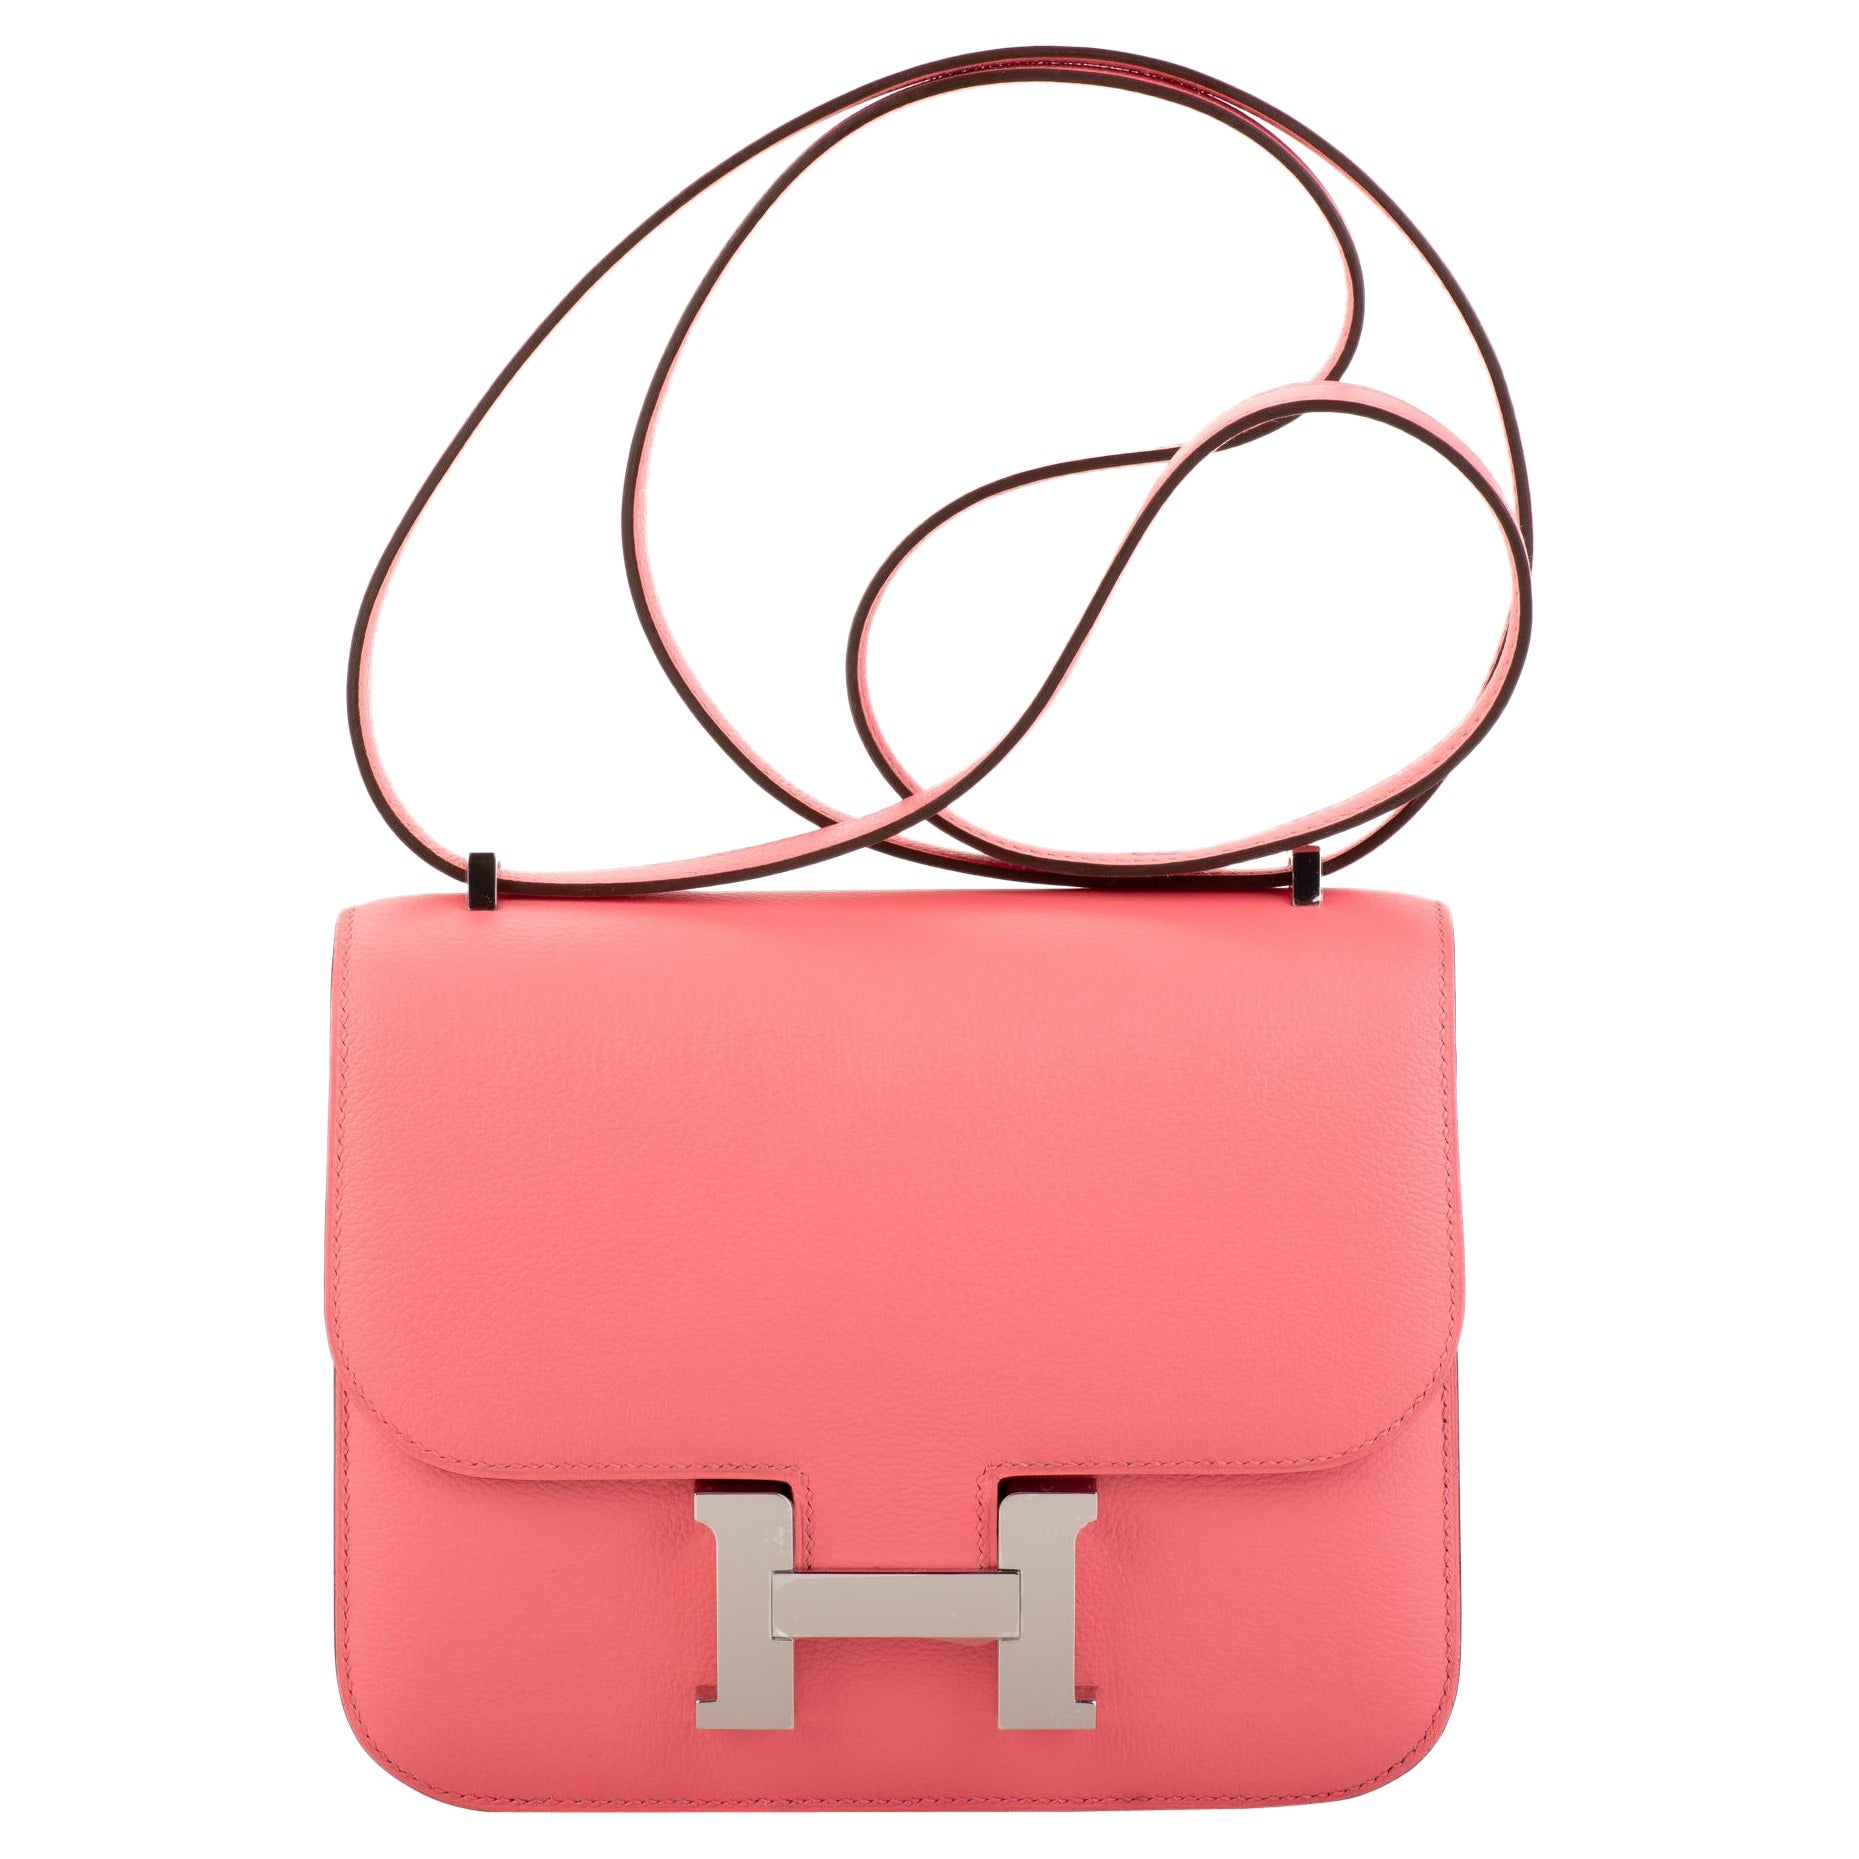 New in Box Hermes Rose Ete' Mini Constance 18 Bag